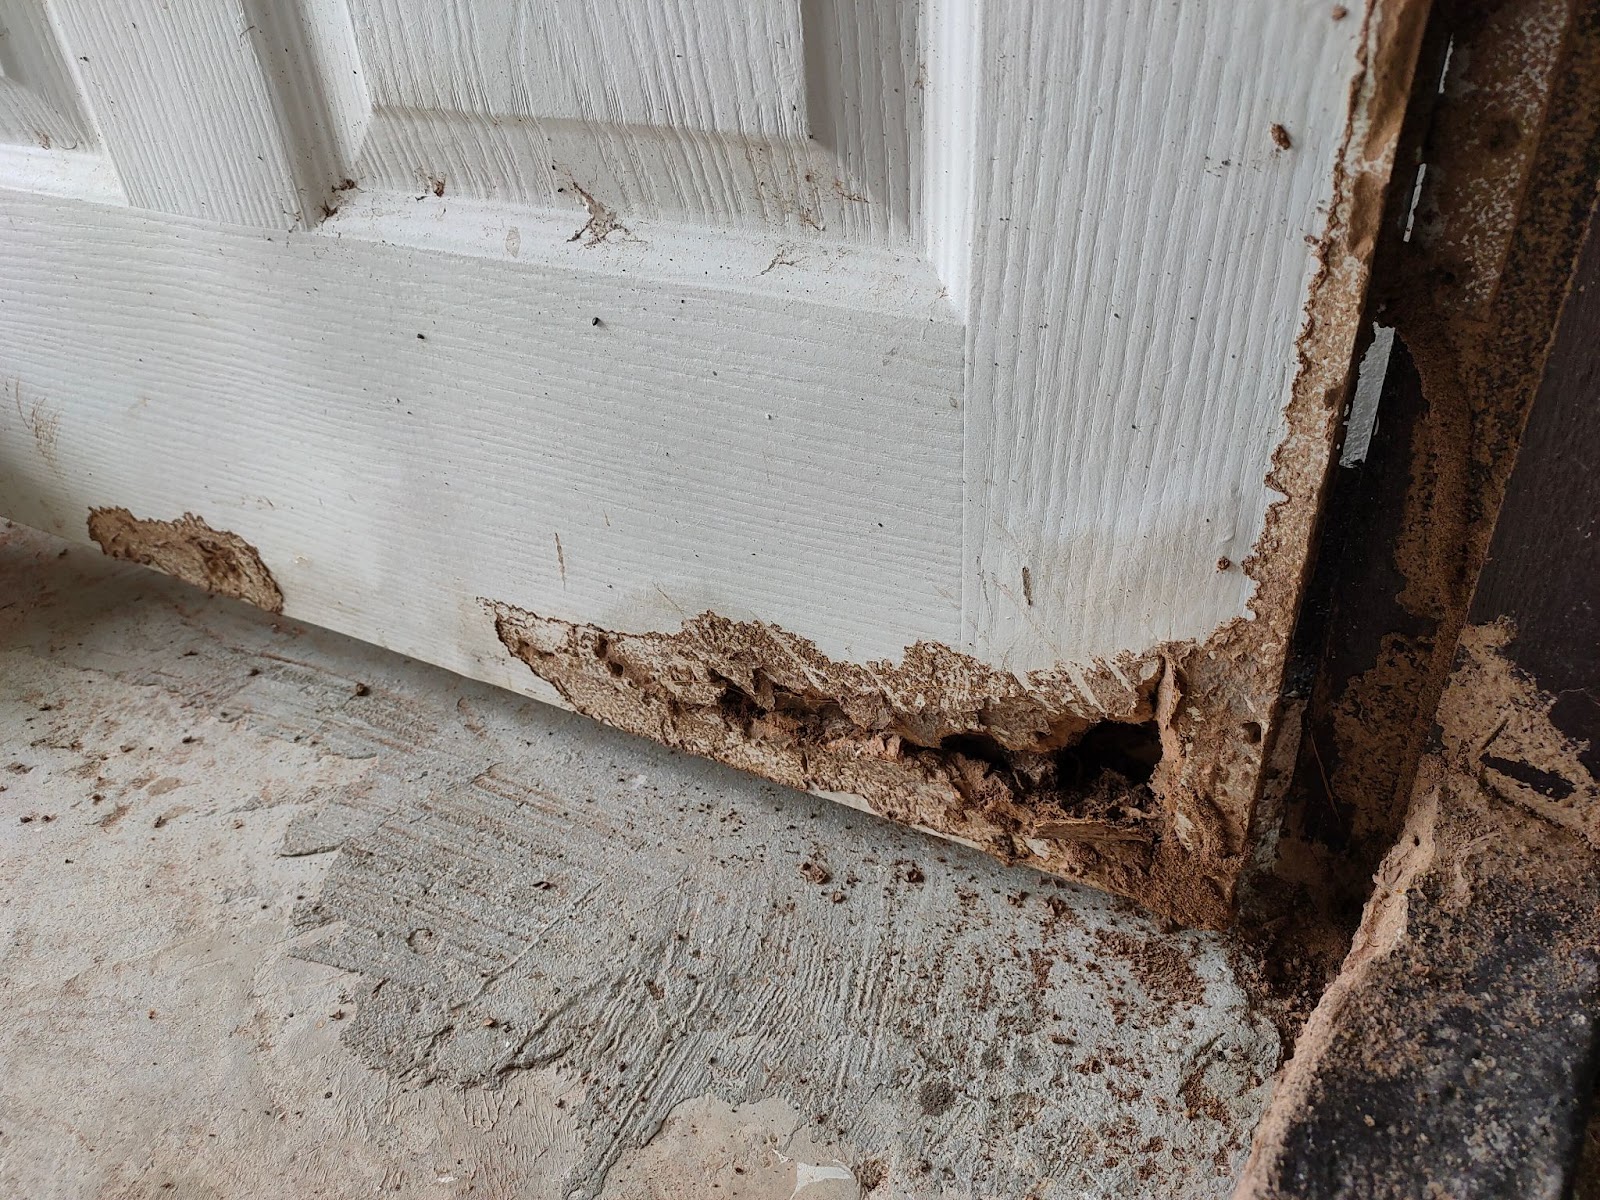 Water damage on a door